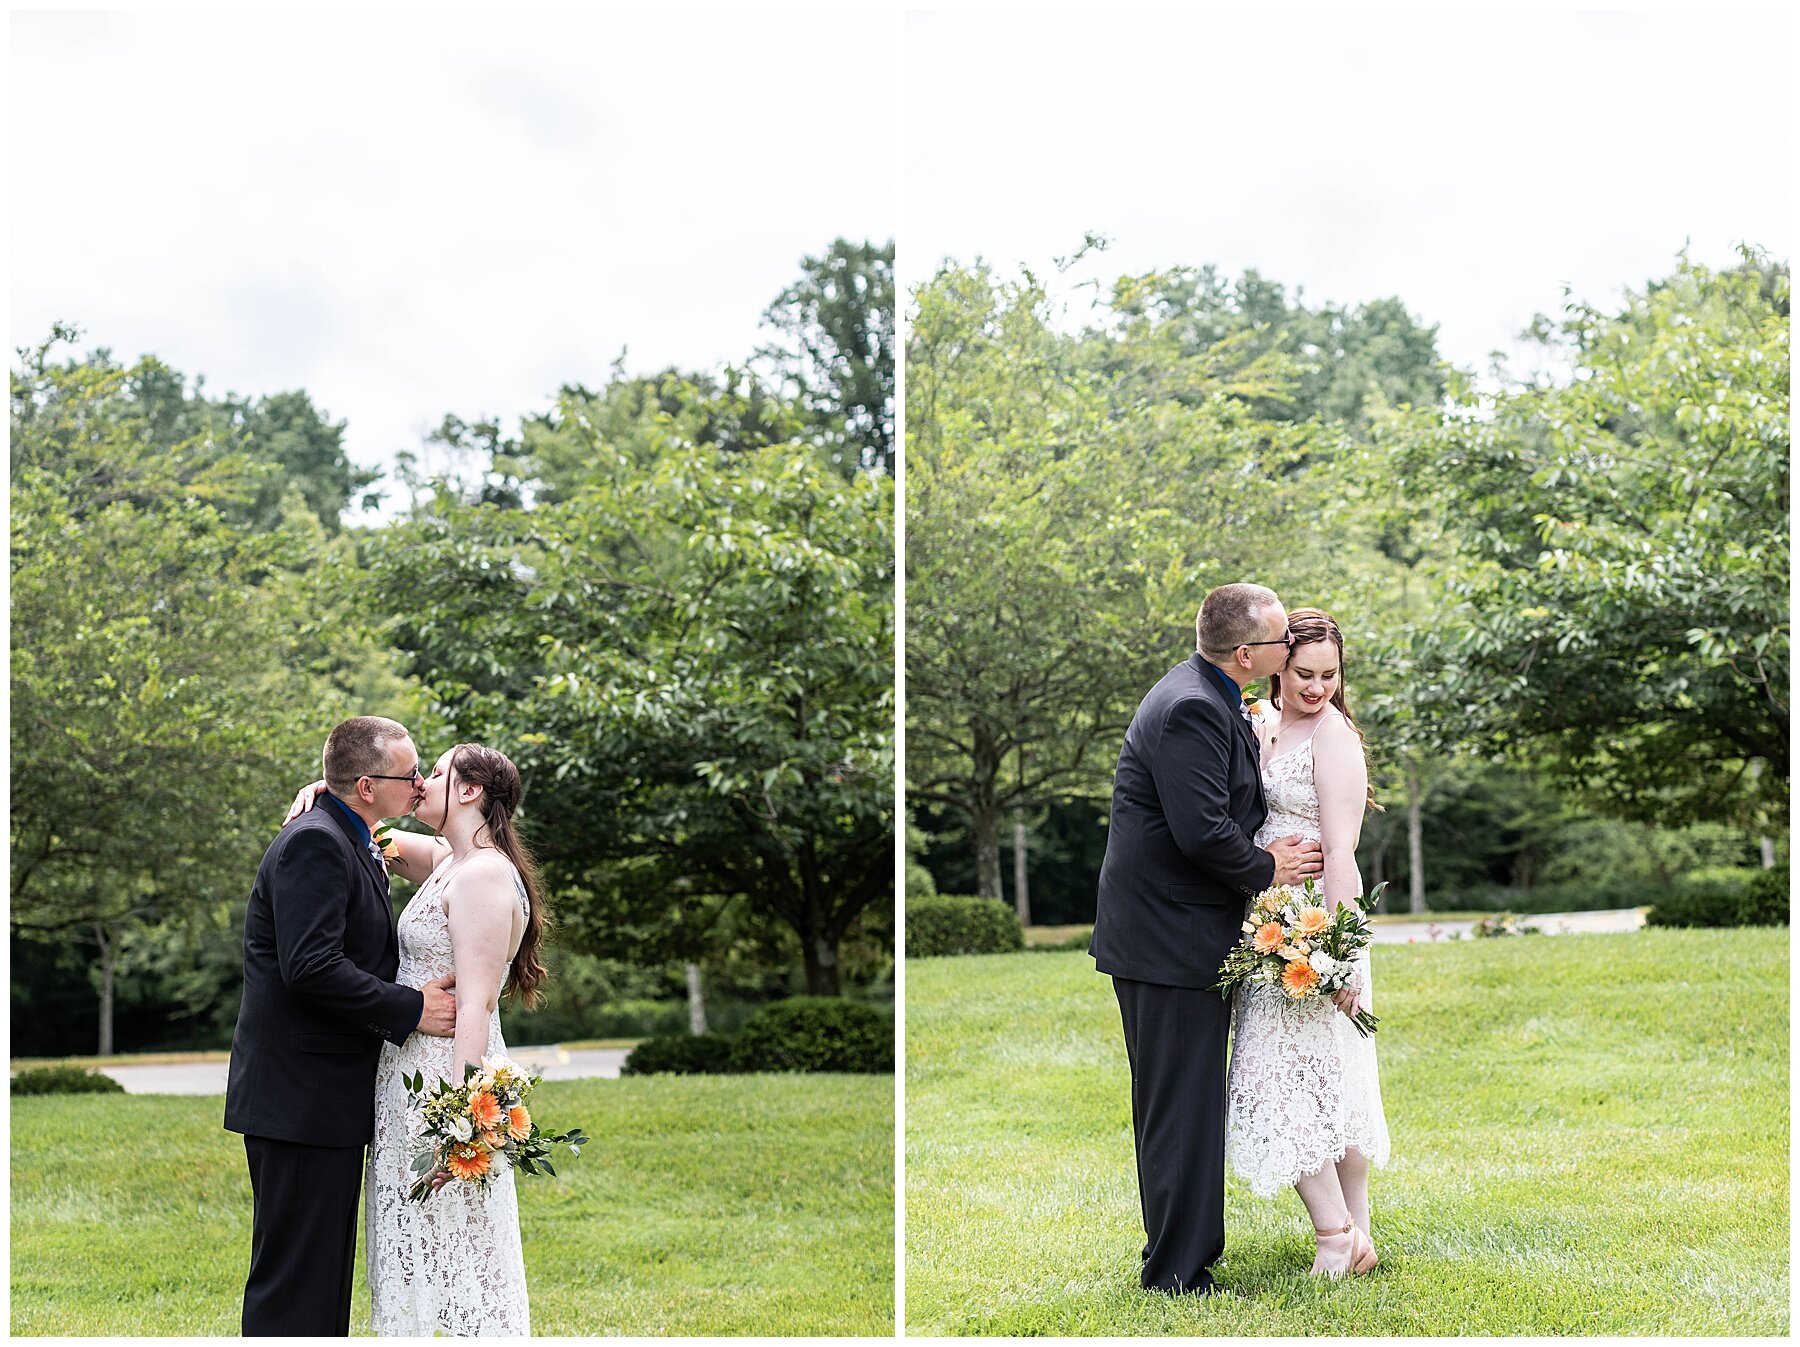 Clare Zach Beloved Weddings Living Radiant Photography - 2020-06-25_0112.jpg